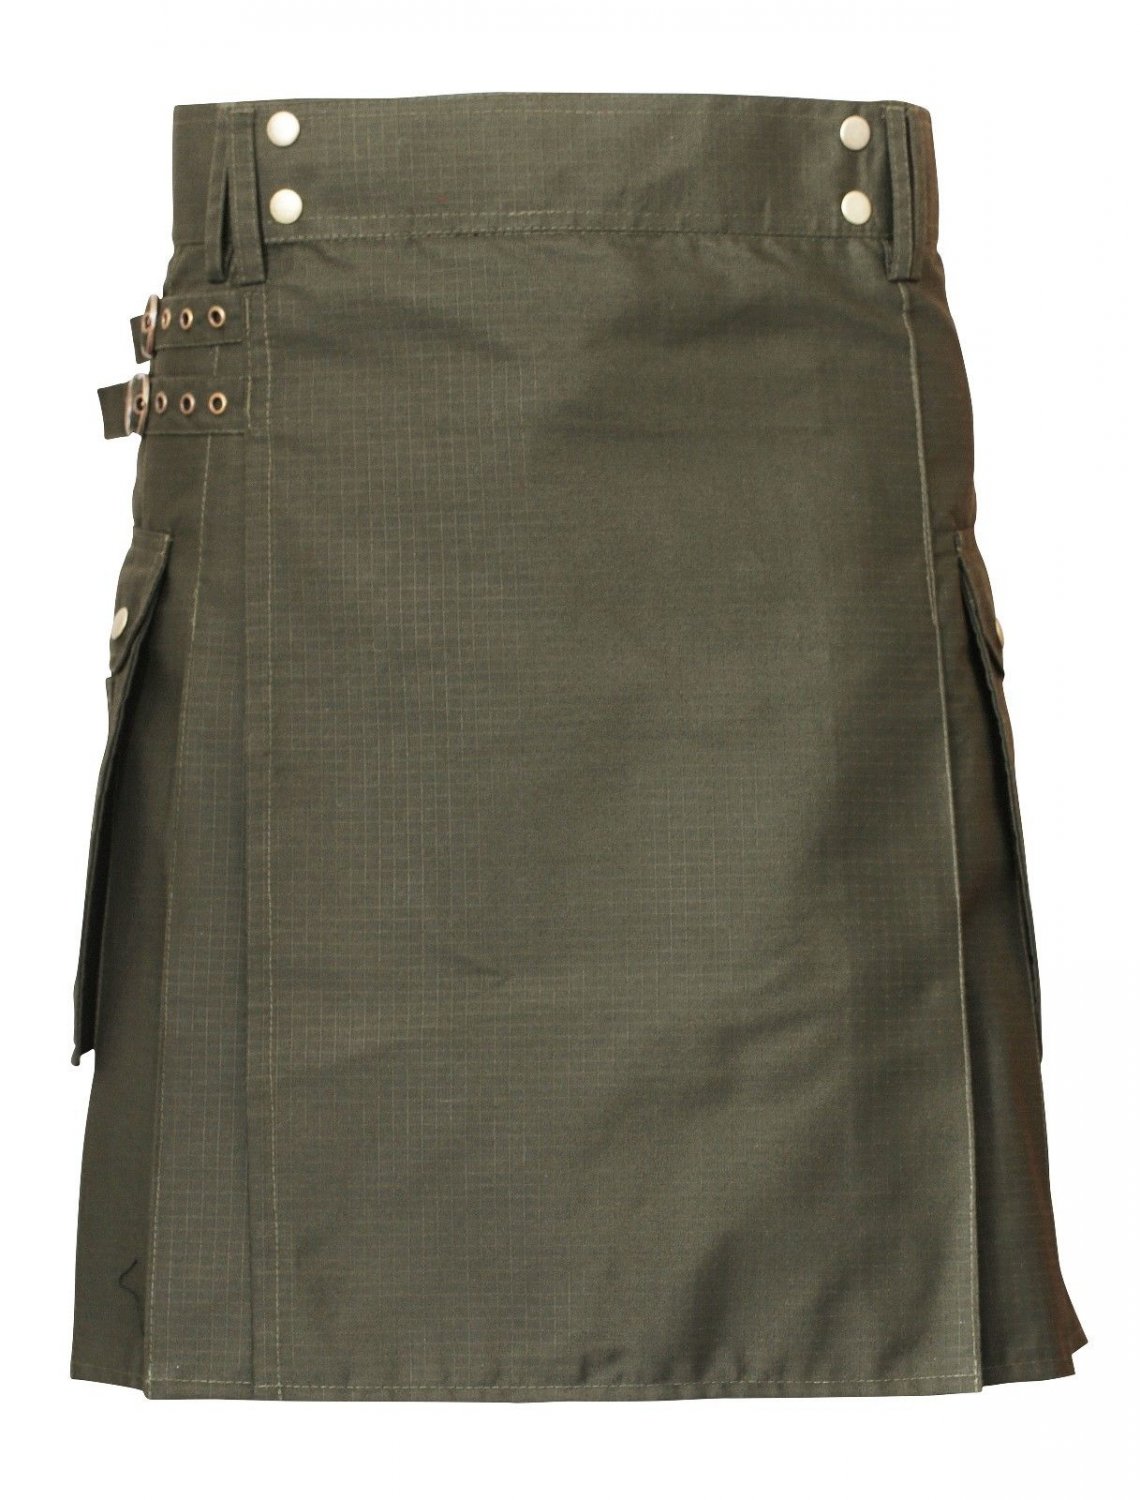 40 Size Premium Quality Olive Green Utility Kilt With Cargo Pockets